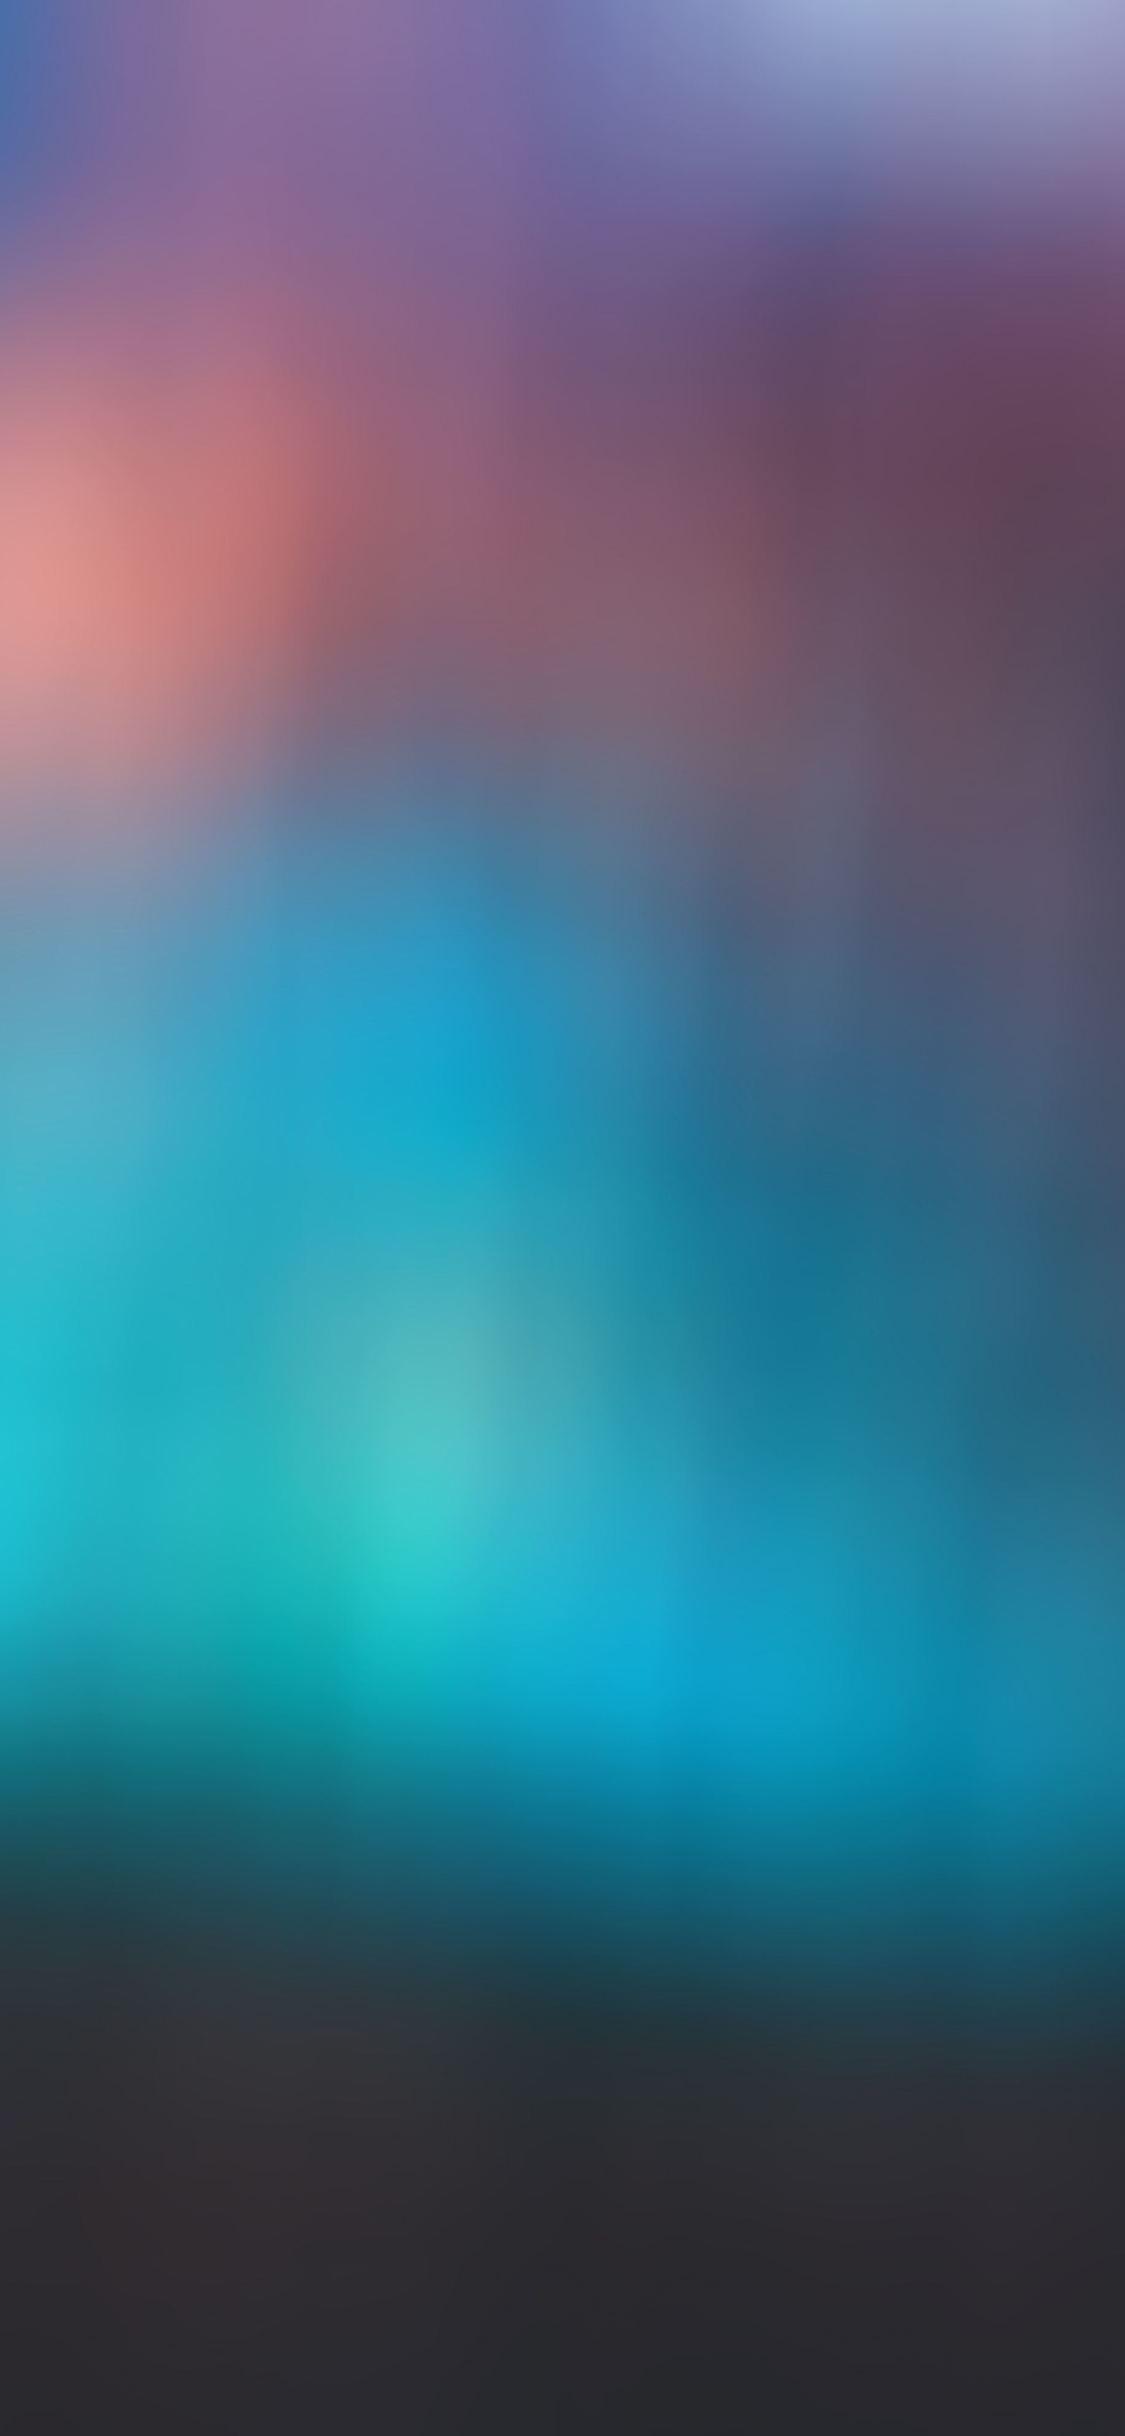 Blur Blue Gradient Cool Background iPhone XS